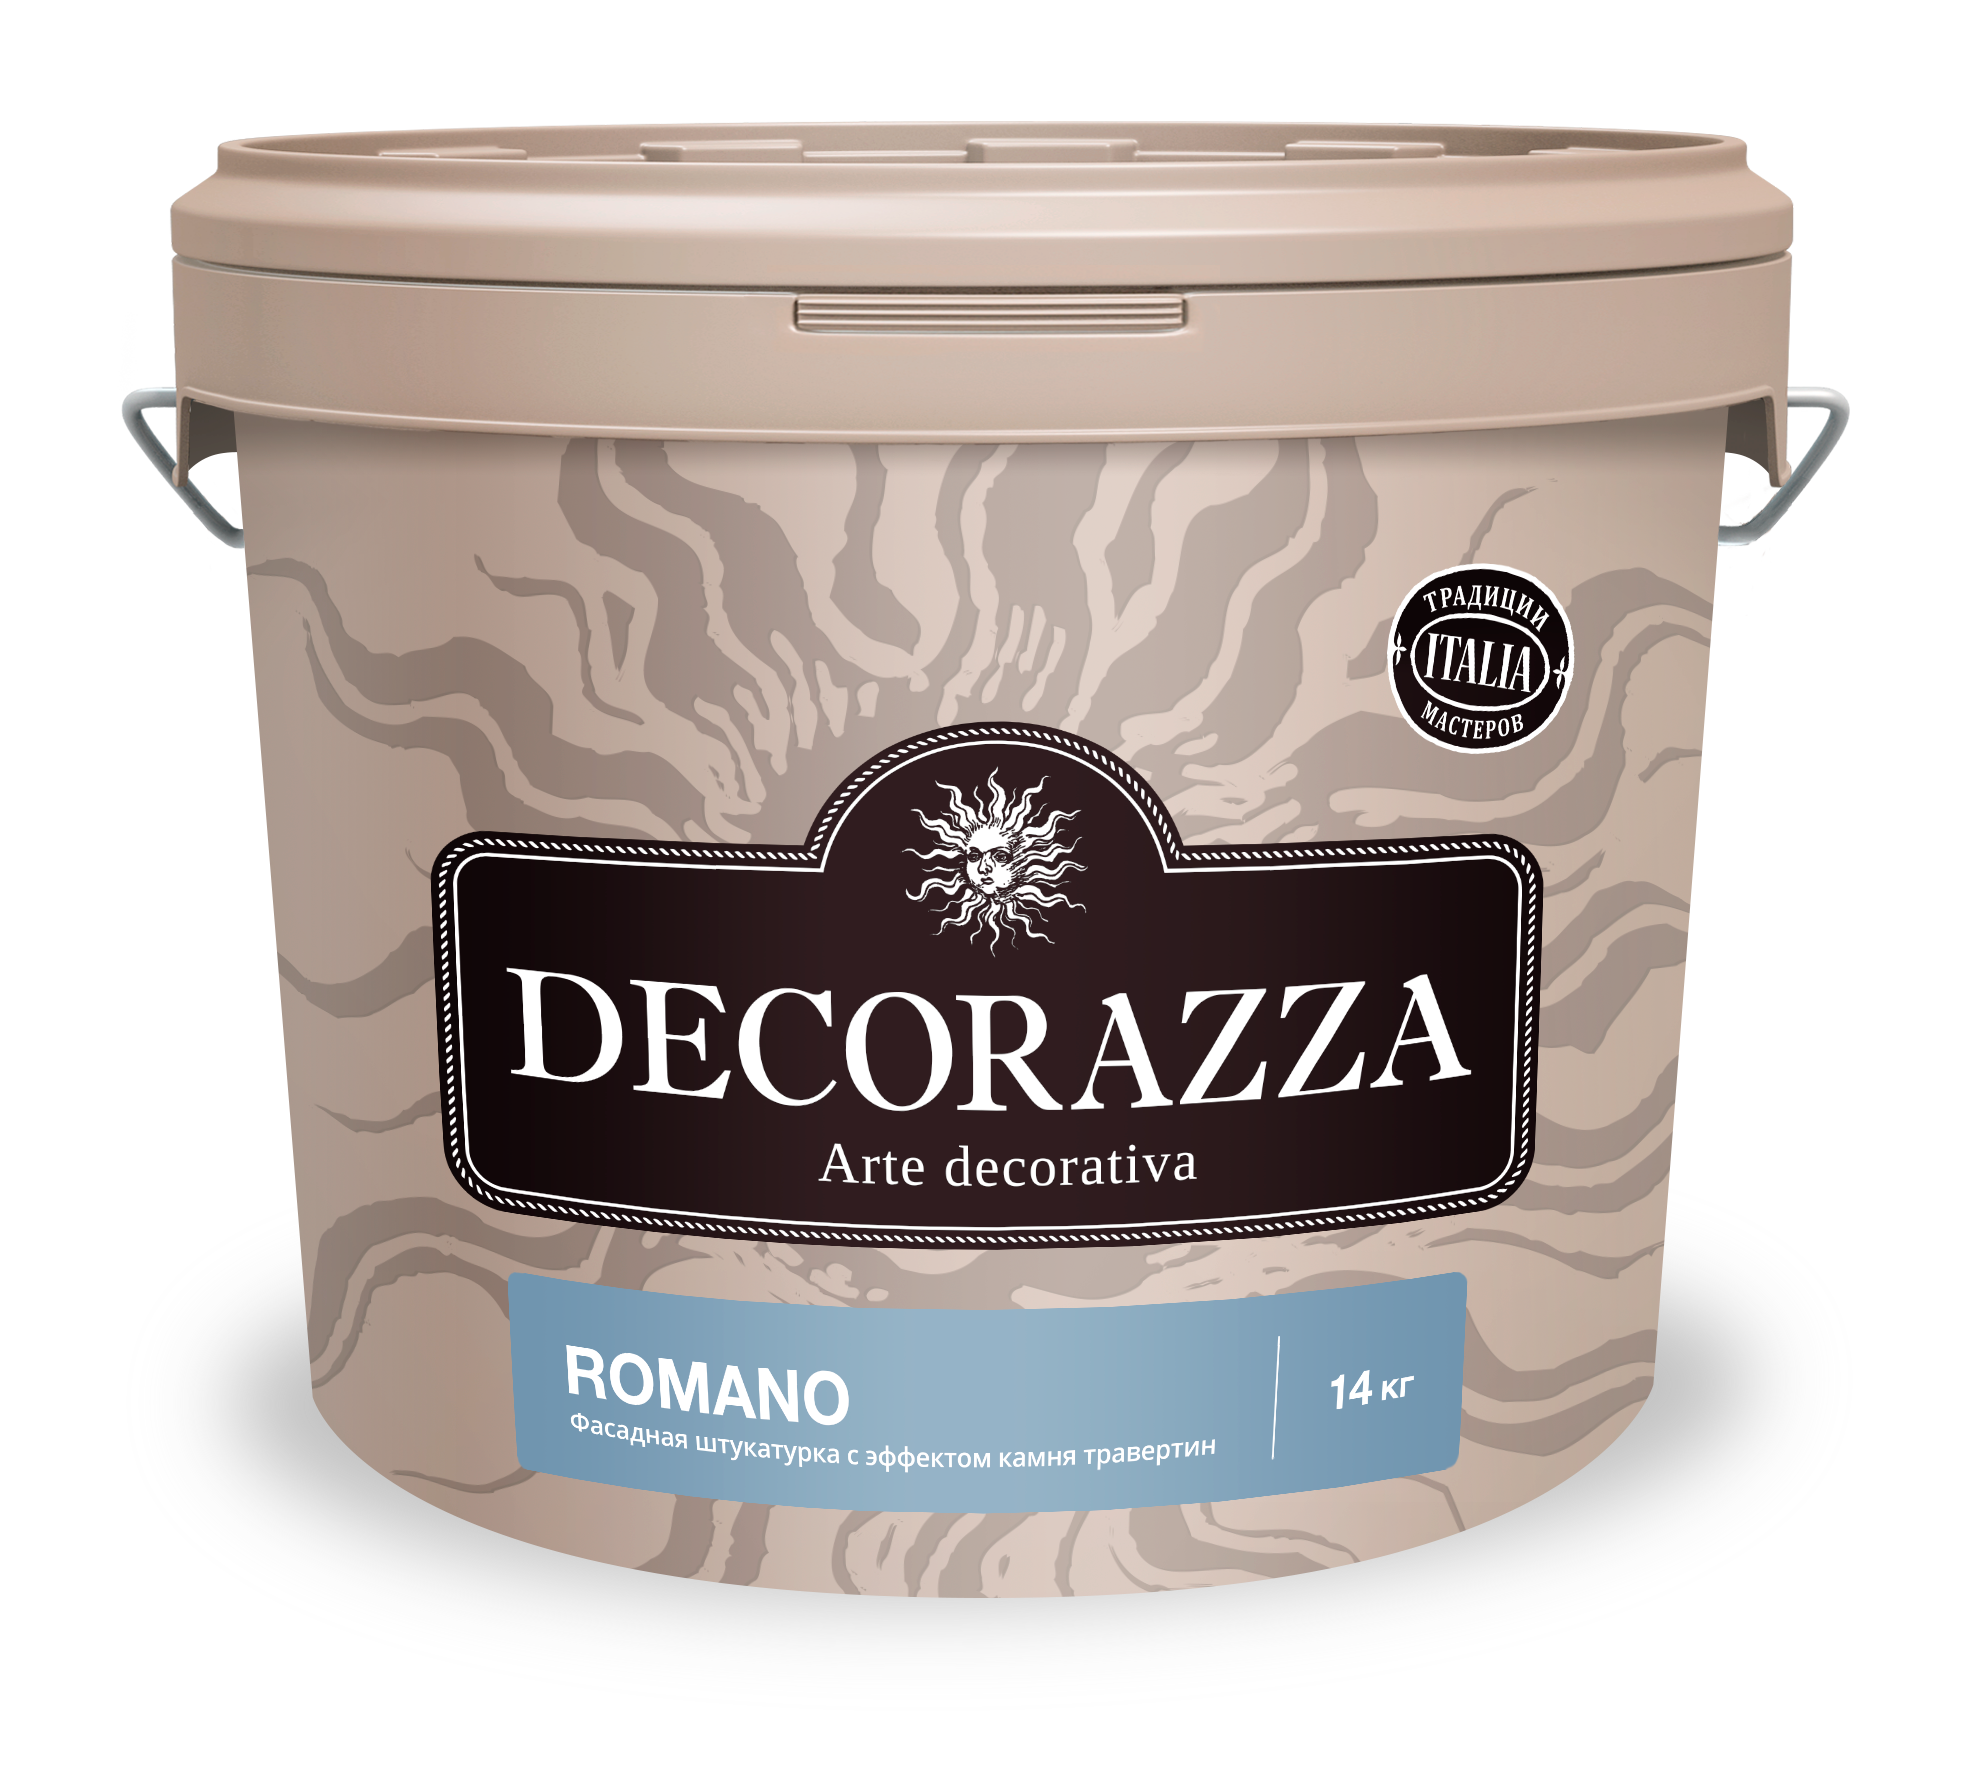 Декоративная штукатурка Decorazza Romano RM 001, 14 кг декоративная штукатурка decorazza velluto vt 001 1 кг